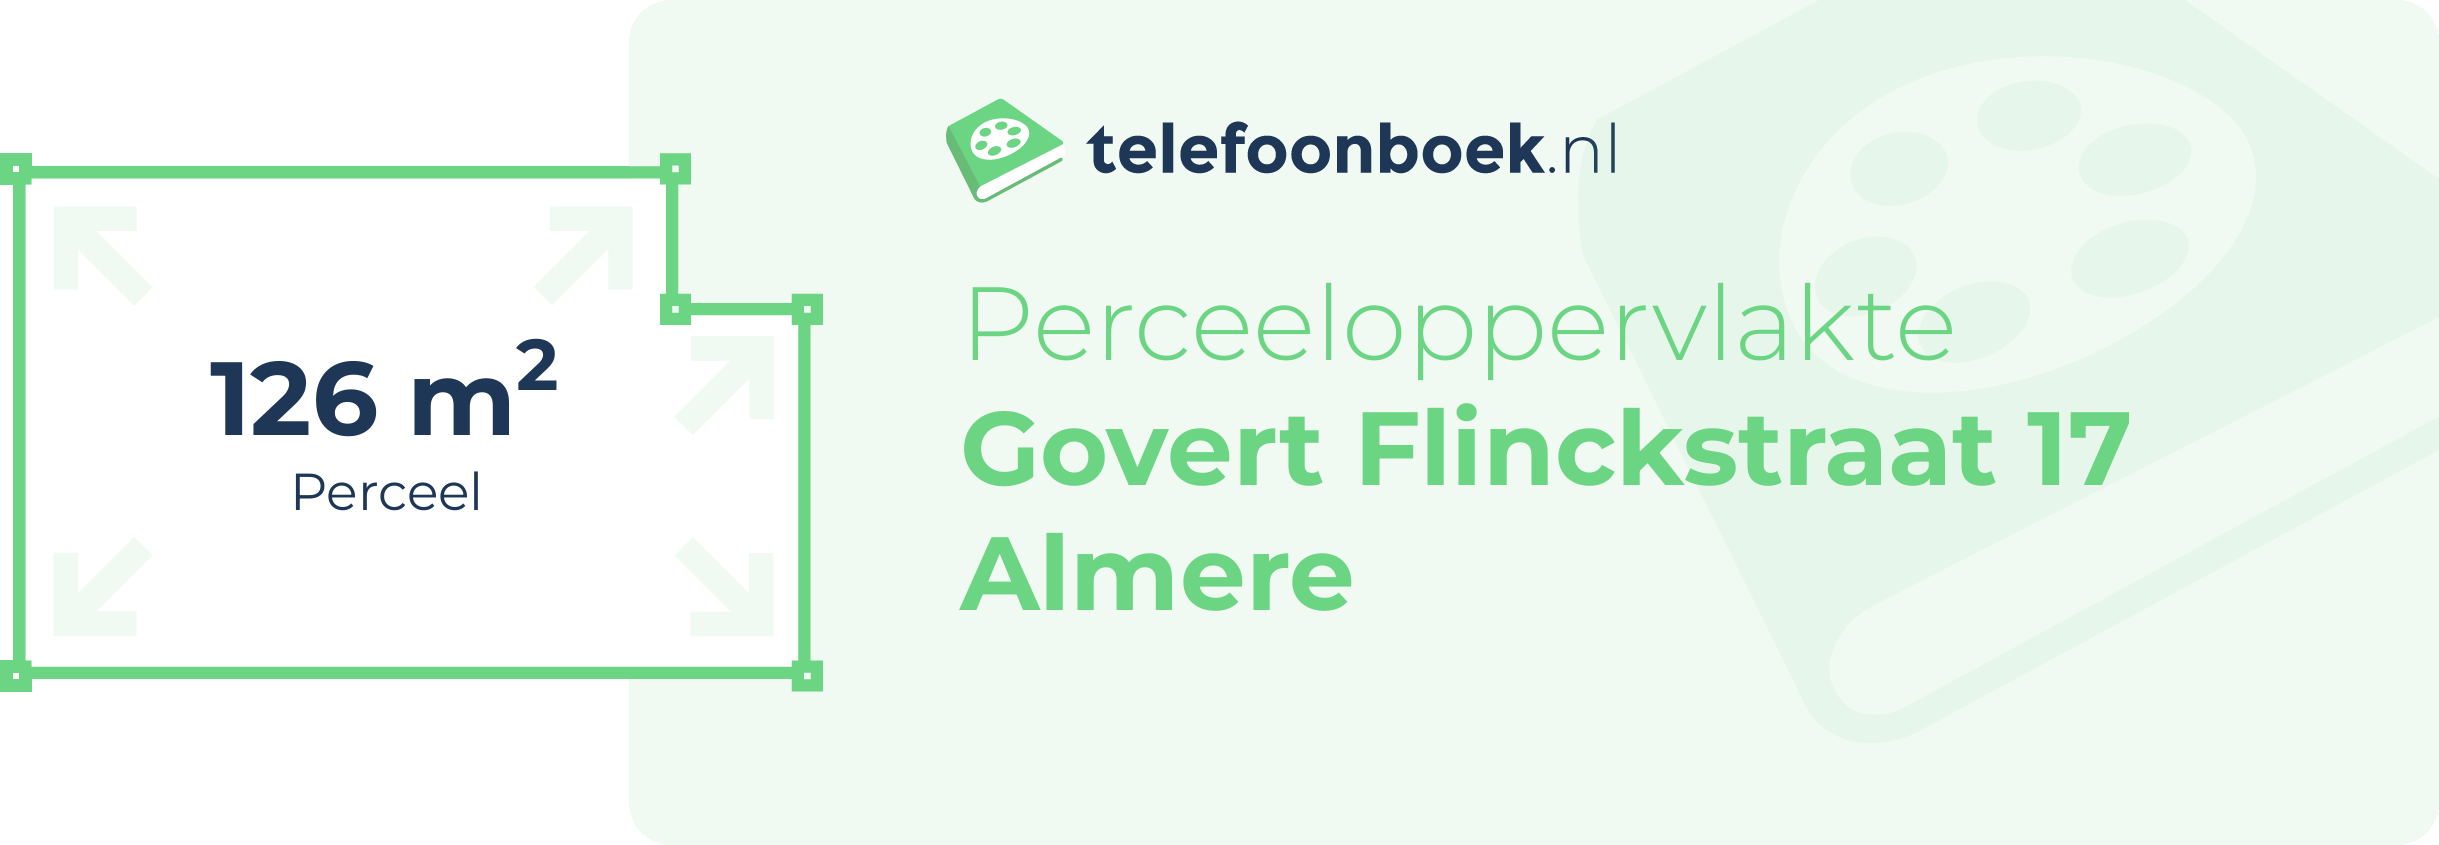 Perceeloppervlakte Govert Flinckstraat 17 Almere